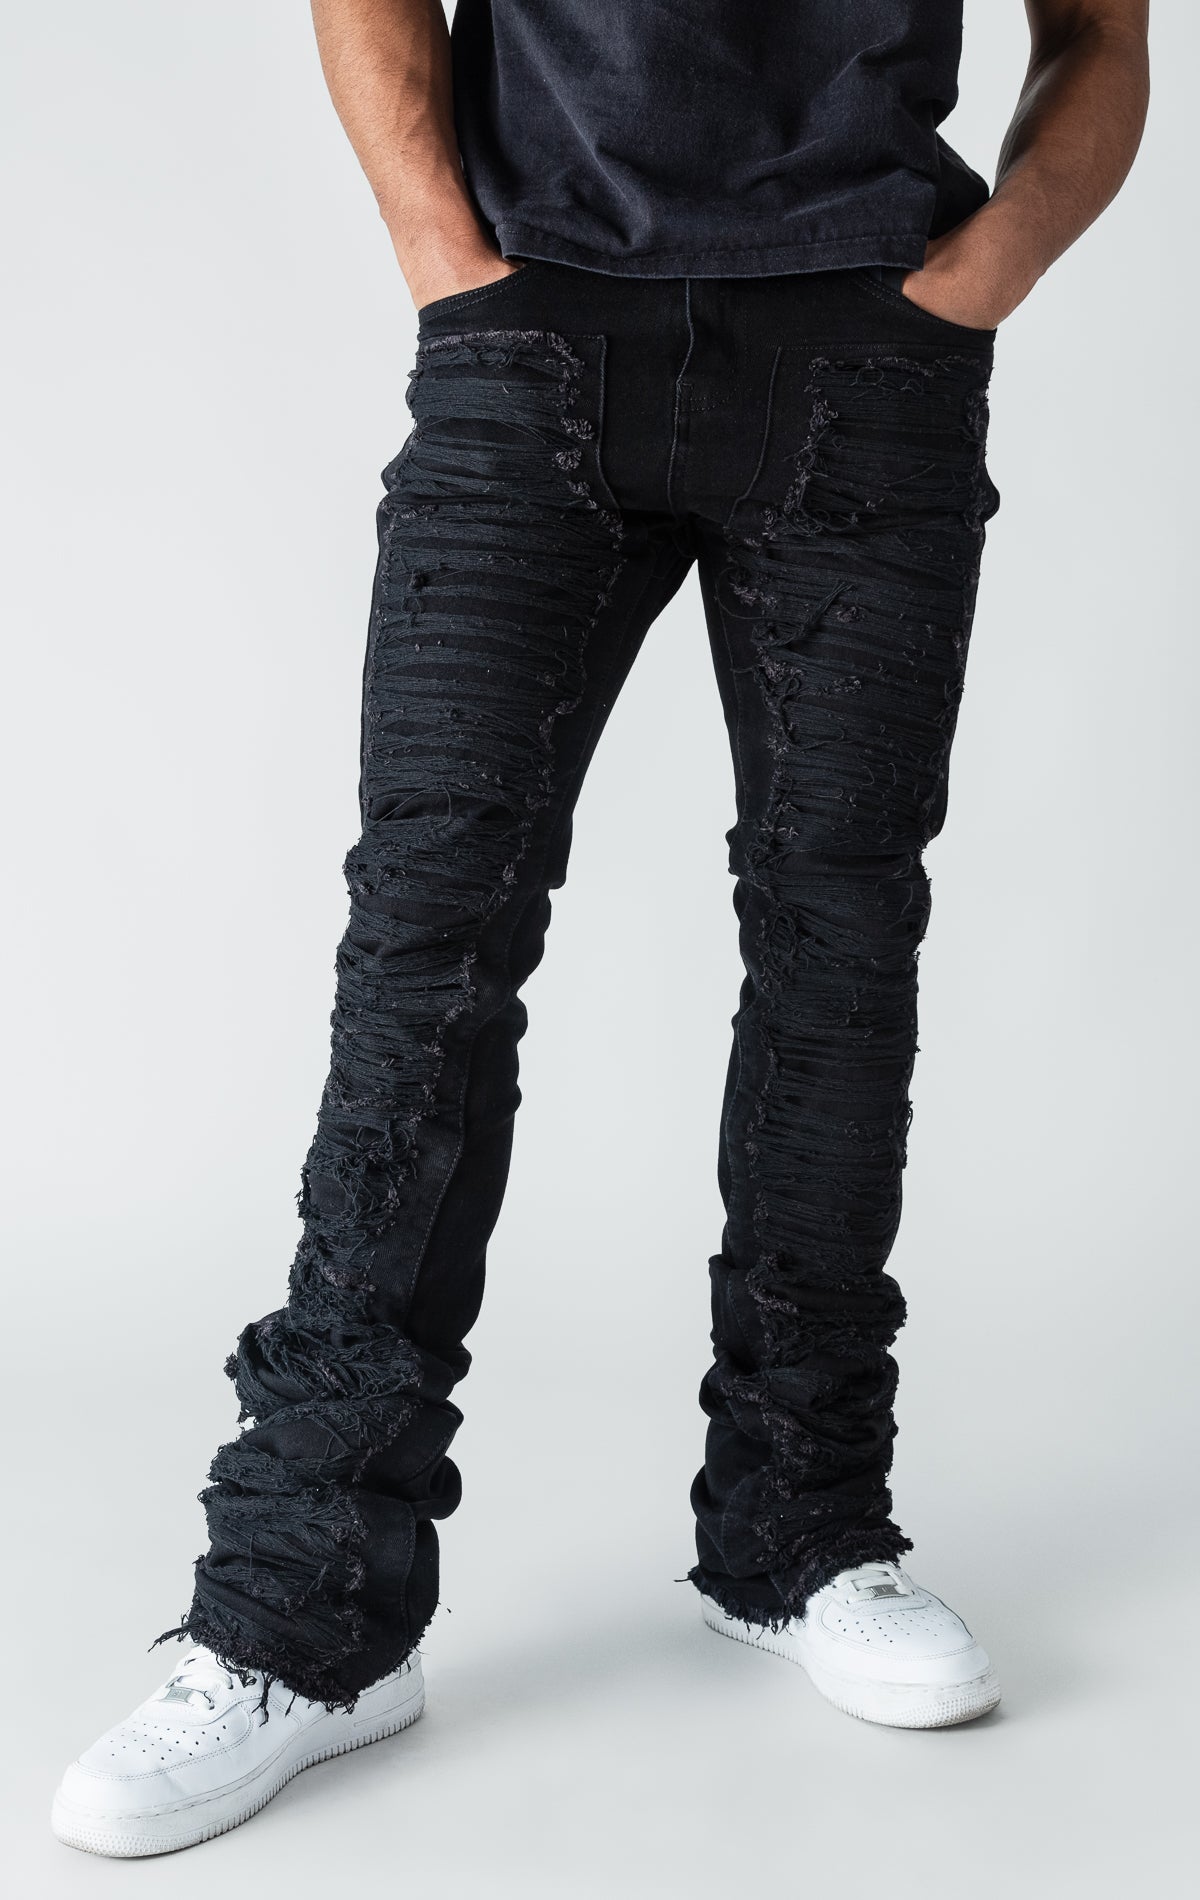 Black patterned stitched, flared denim stacked jeans.